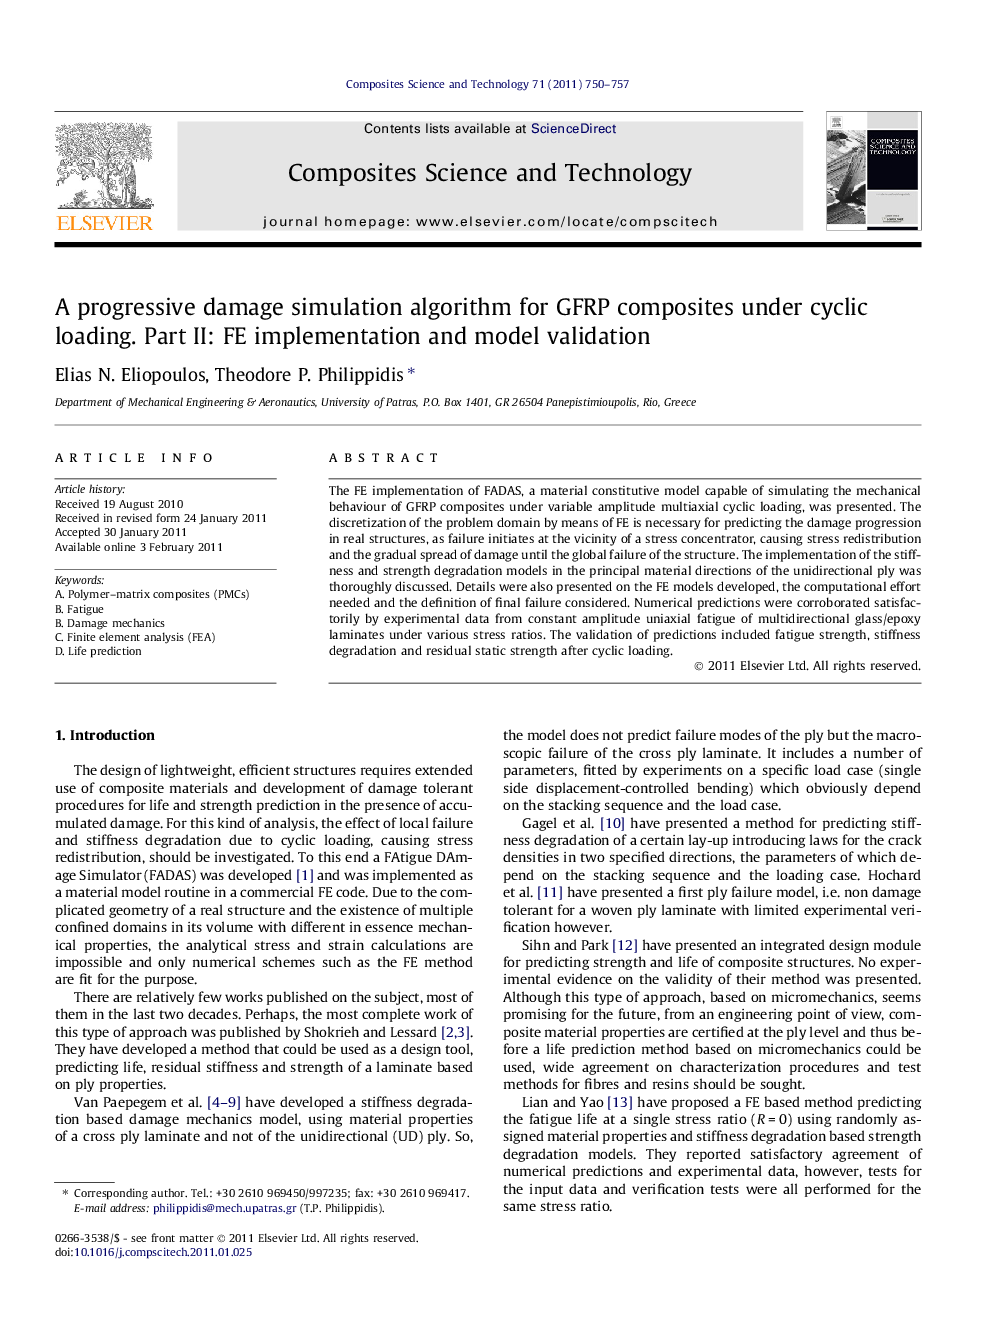 A progressive damage simulation algorithm for GFRP composites under cyclic loading. Part II: FE implementation and model validation